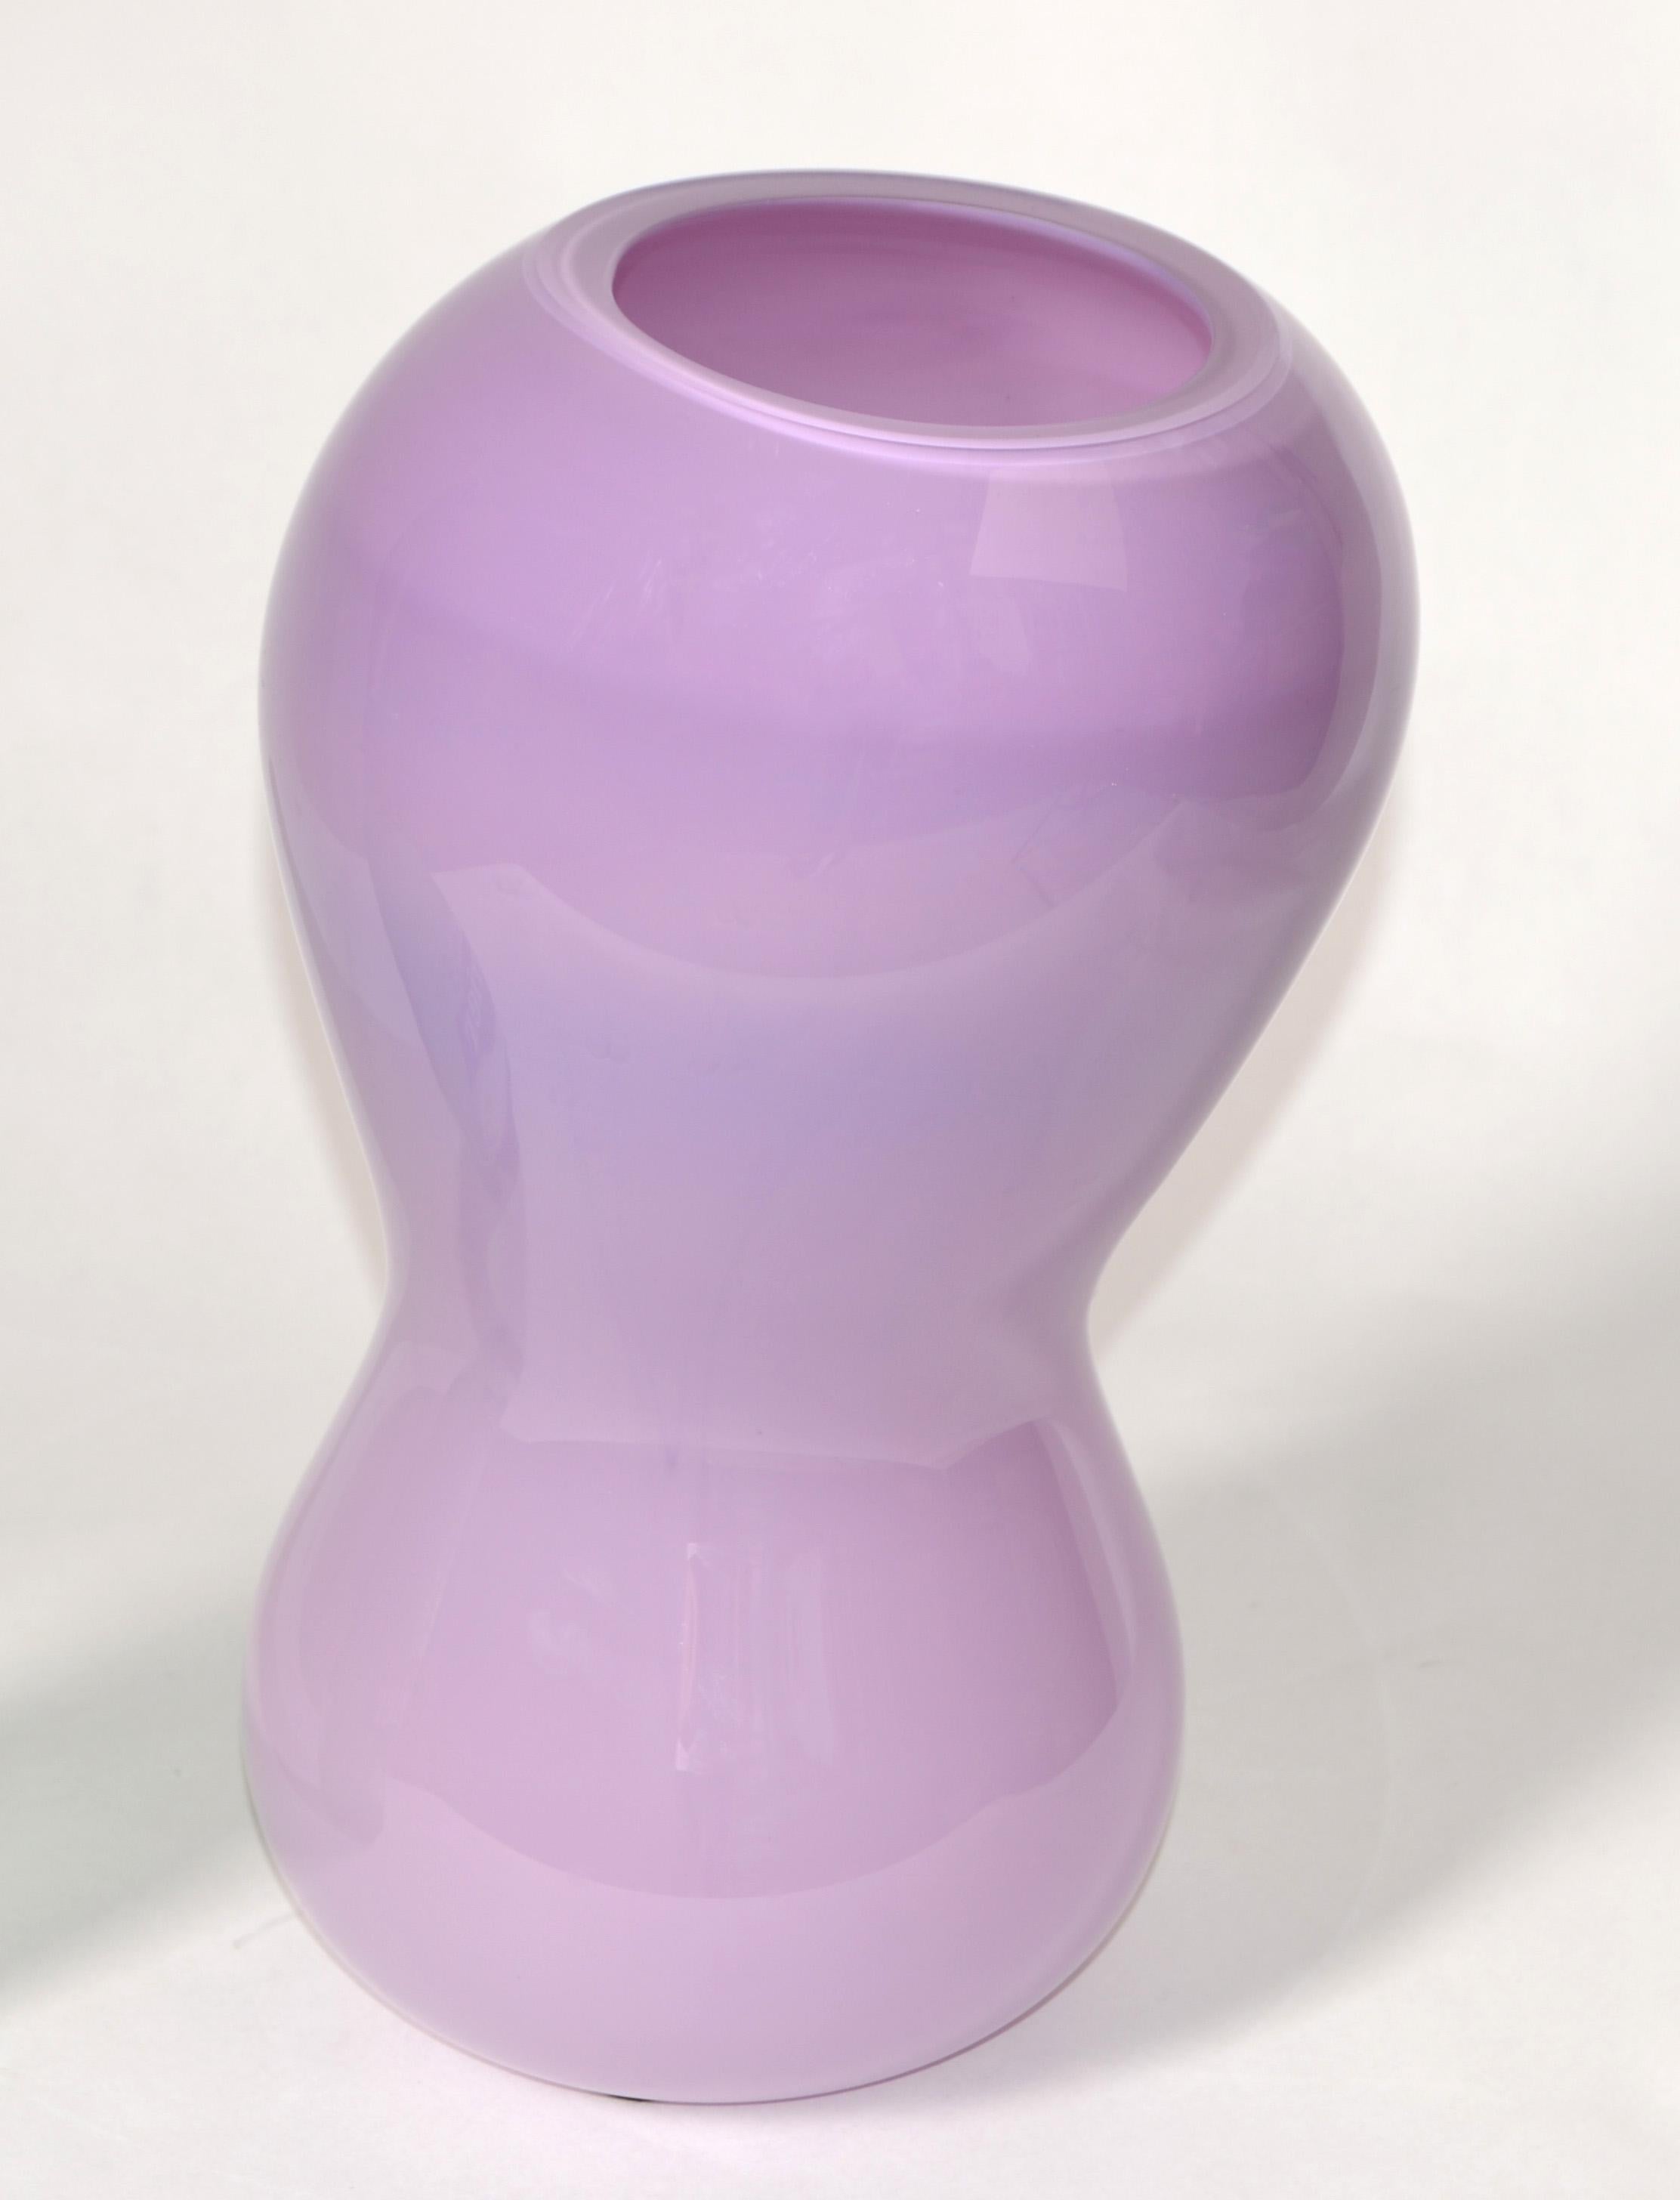 1992 Nigel Coates England Modern Encased Lavender Art Glass Vase Salvati Italy   In Good Condition For Sale In Miami, FL